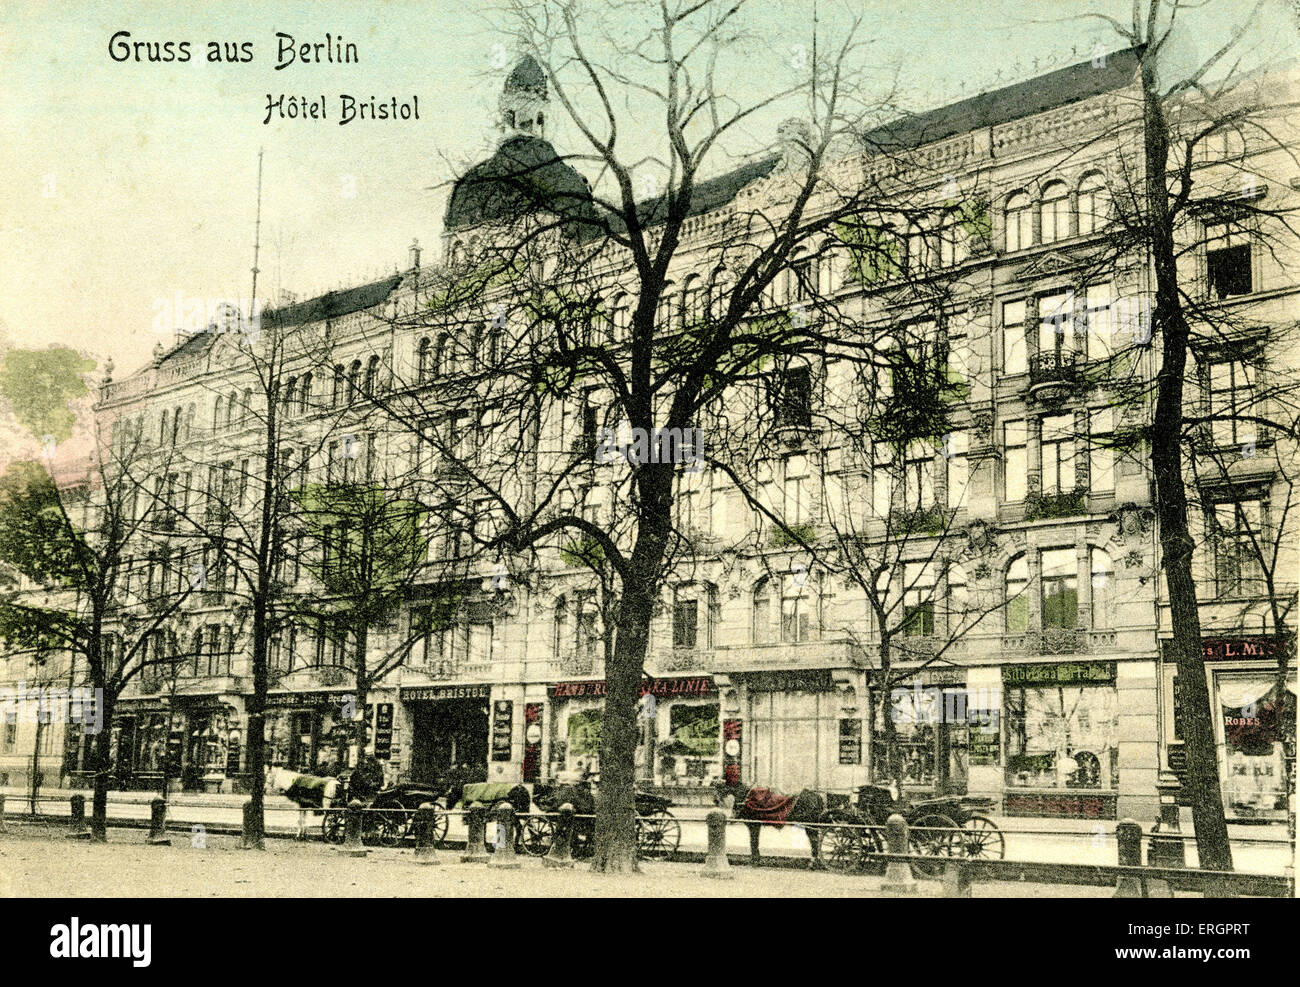 Hotel Bristol, Berlin, Germany. Early 20th century. Street view. Stock Photo